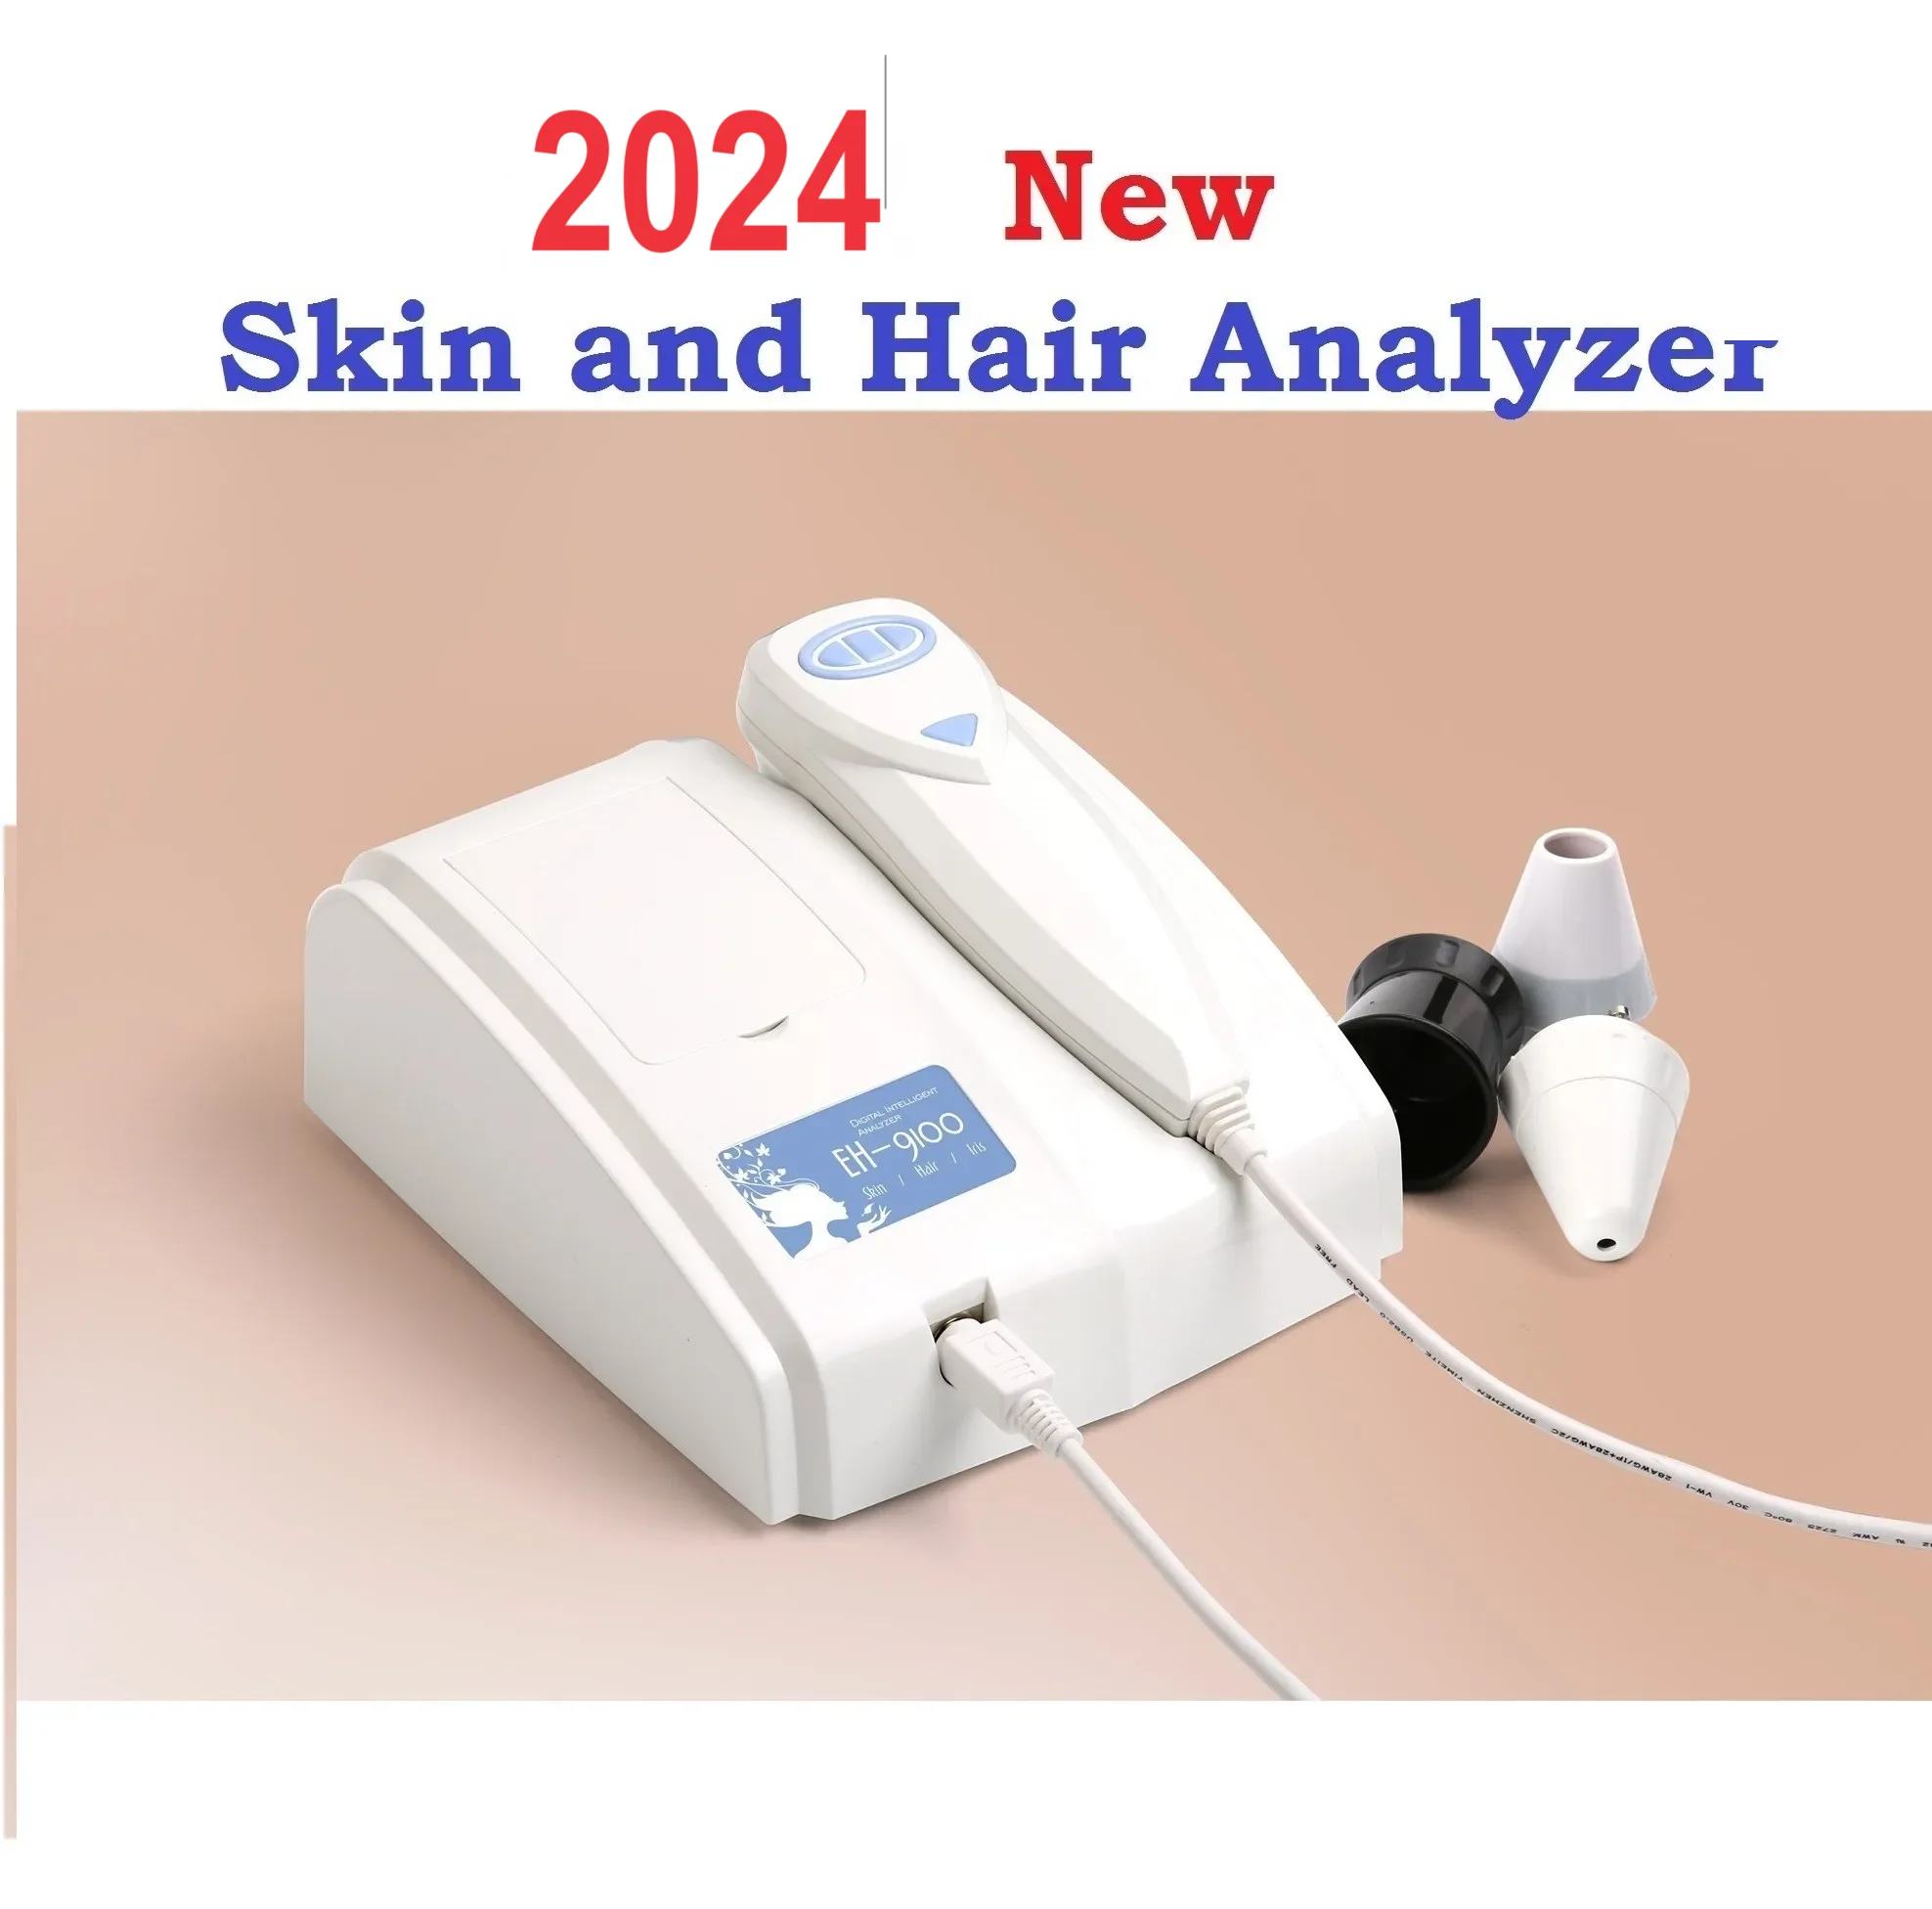 

USB Multifunction UV Skin and Hair Analyzer 2024 New 8.0 MP High Resolution Digital CCD Skin Camera Diagnosis Skinscope DHLfree